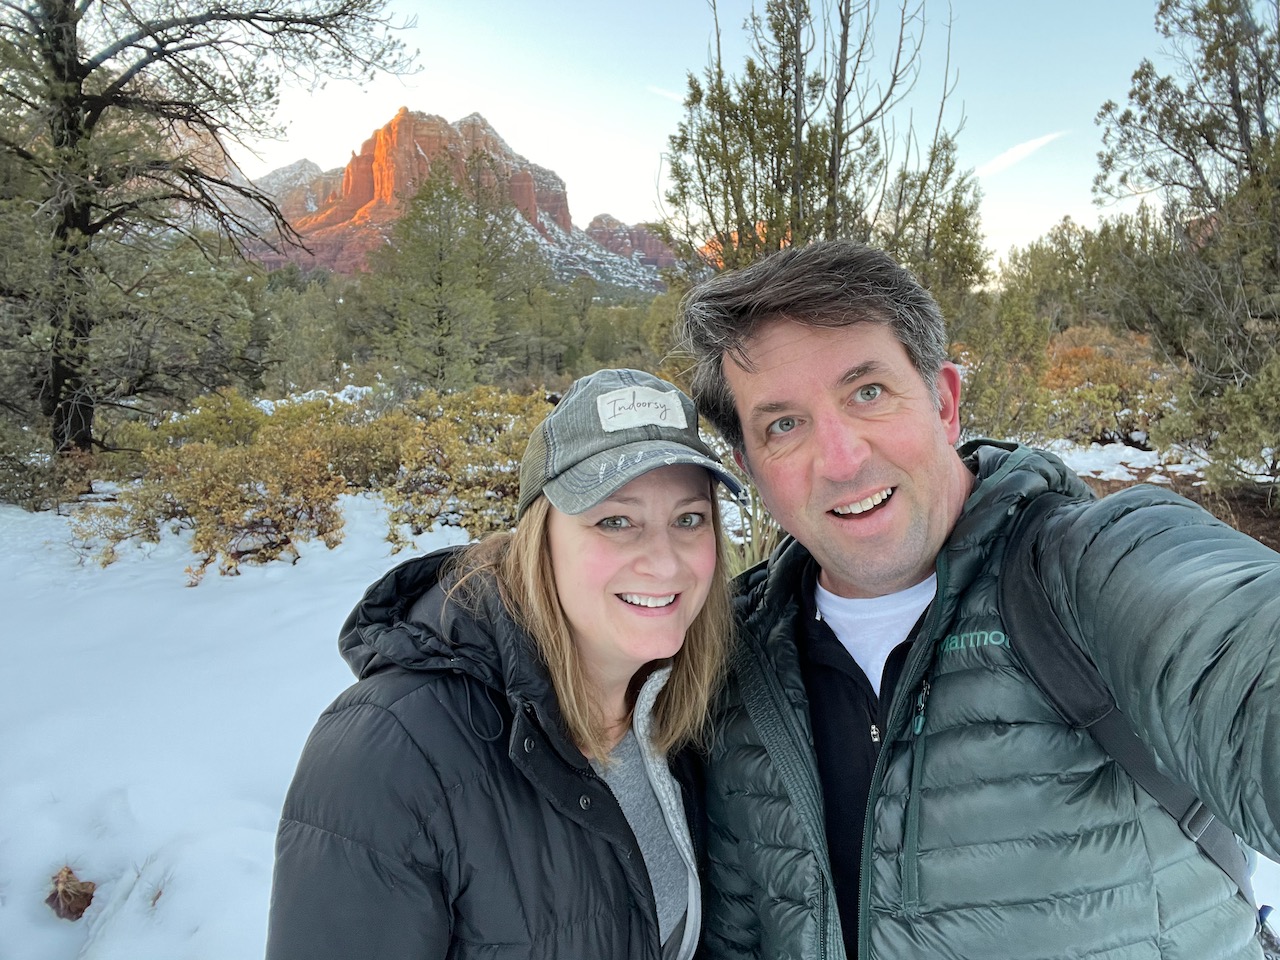 Anne & Bill take in the golden hour light in Utah